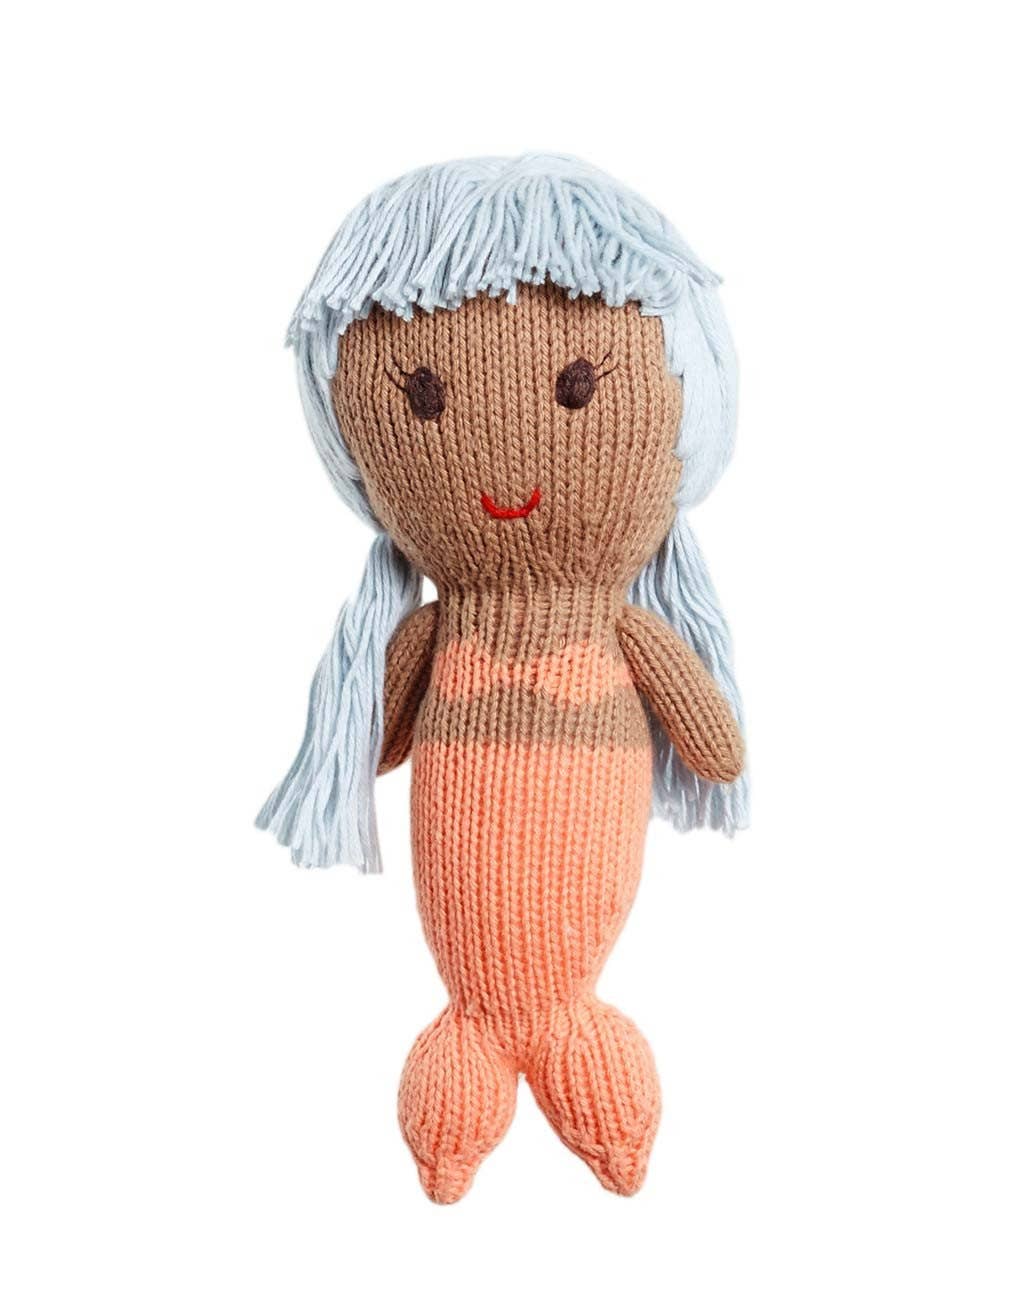 The Little Market - Mermaid Doll